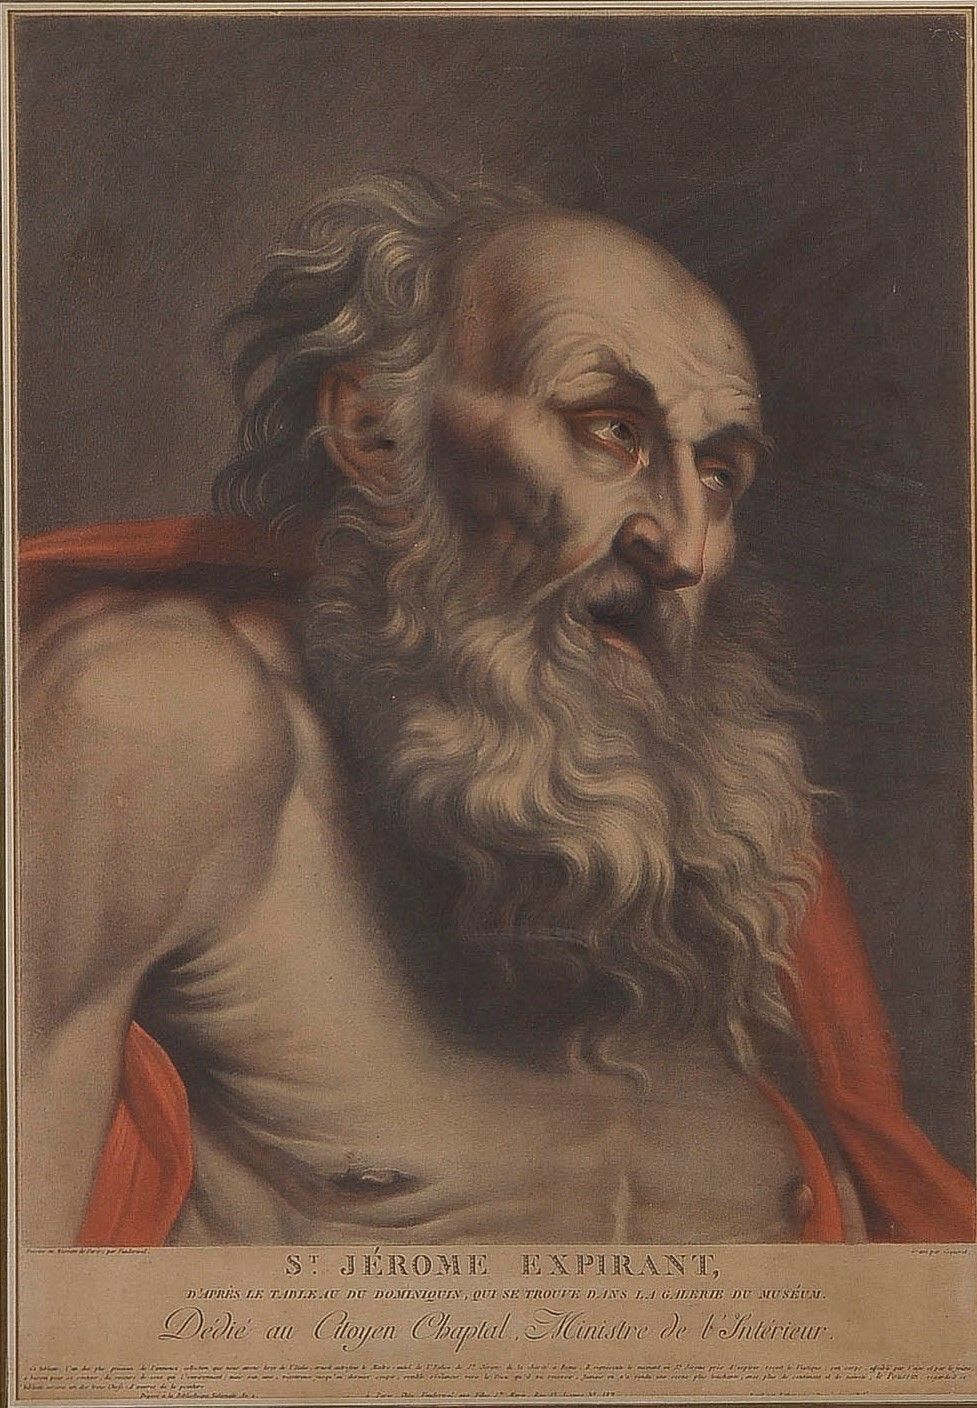 Null 皮埃尔-查尔斯-库克雷 (1761-1832)

圣杰罗姆到期，根据多米尼金的画作。

黑体字印刷的颜色

美丽而罕见的羊皮纸上的证明

视力：62 &hellip;